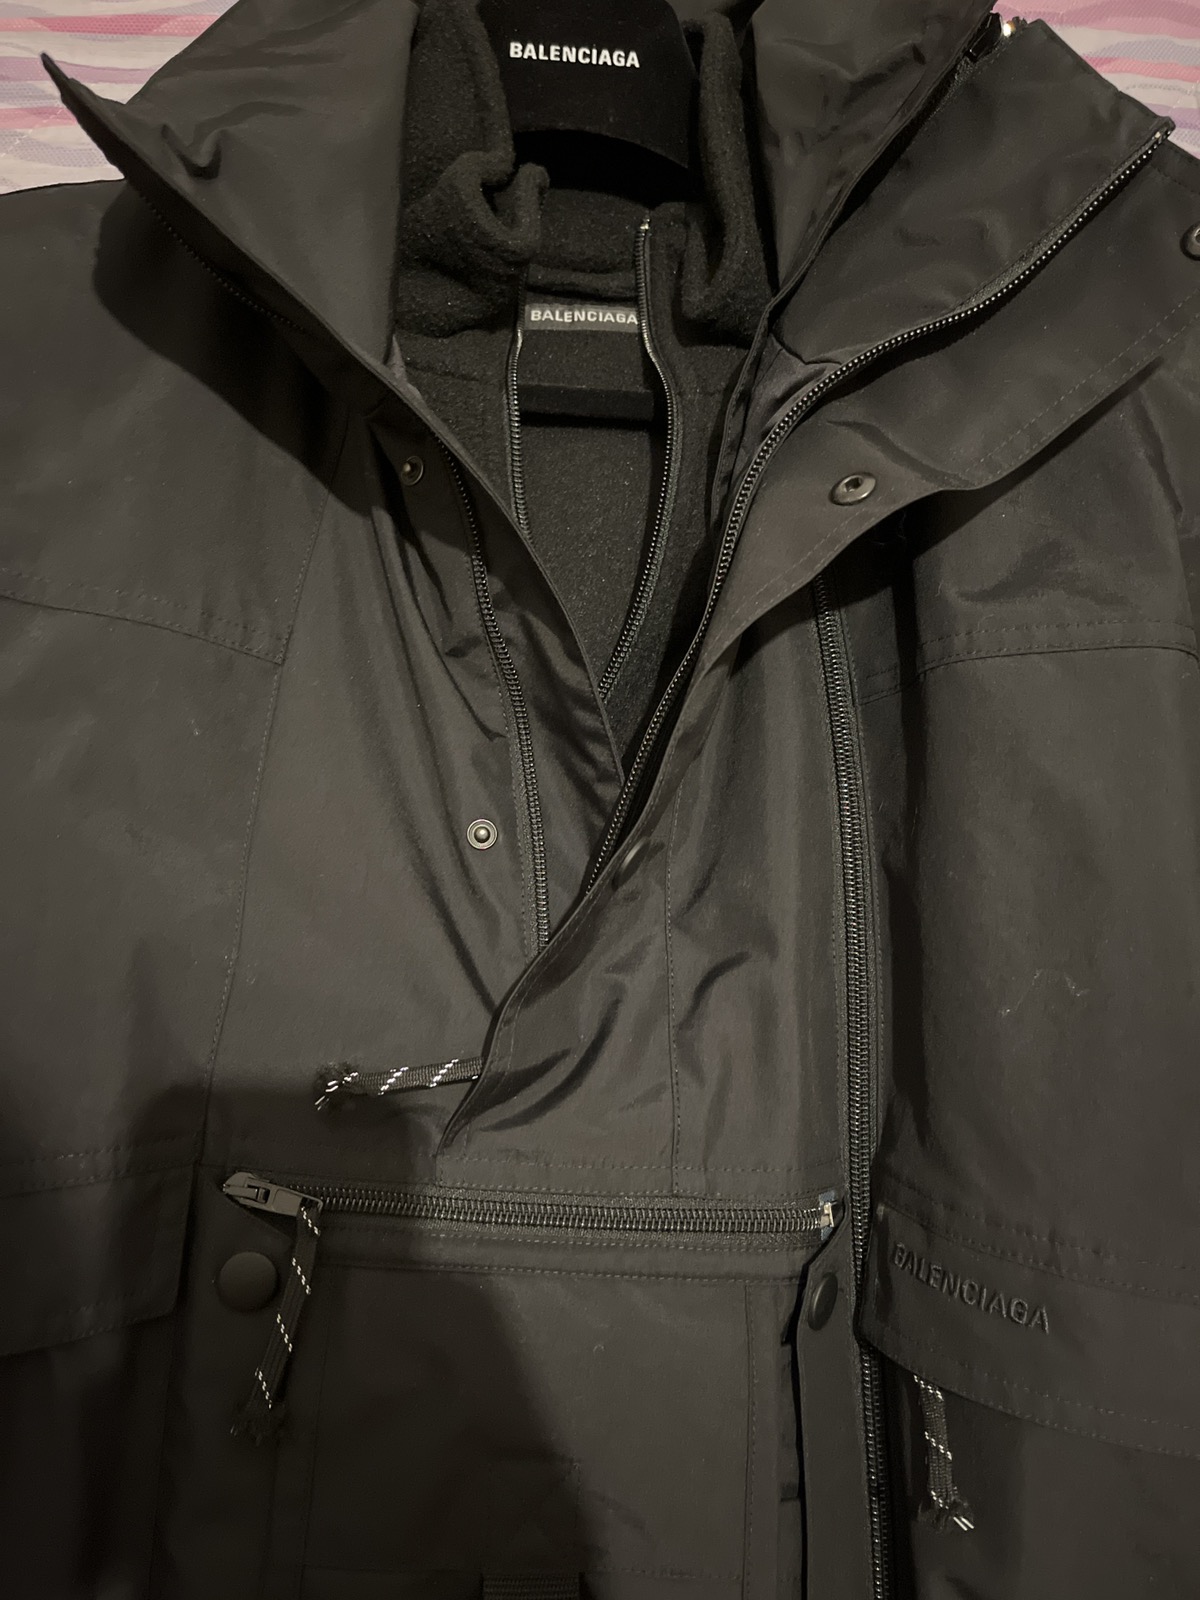 AW18 Balenciaga AW18 Black Parka Jacket sz 44 M-L - 16